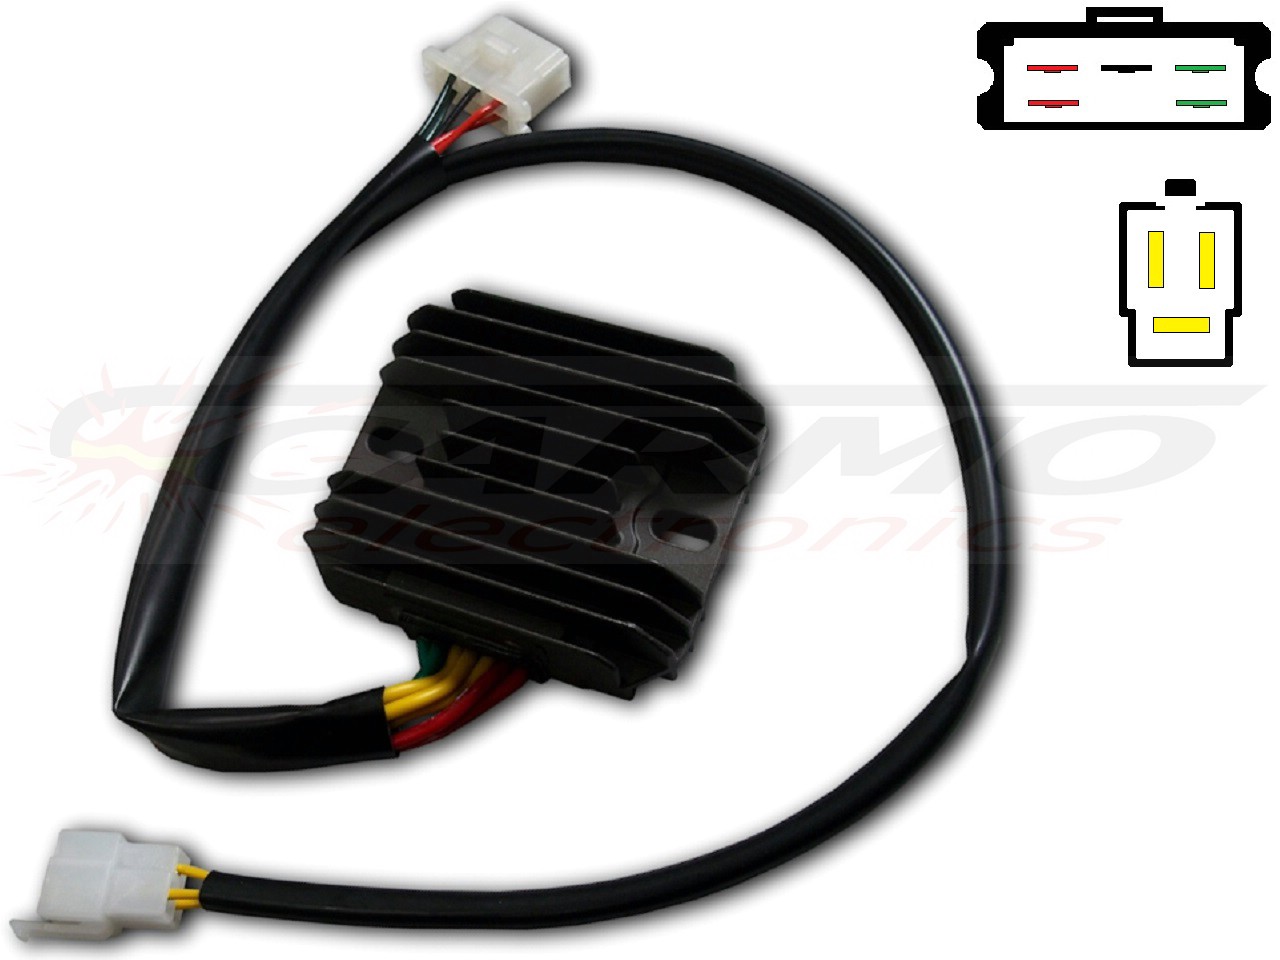 CARR694VF Honda VF700c Suzuki VS1400 MOSFET Voltage regulator rectifier - Click Image to Close